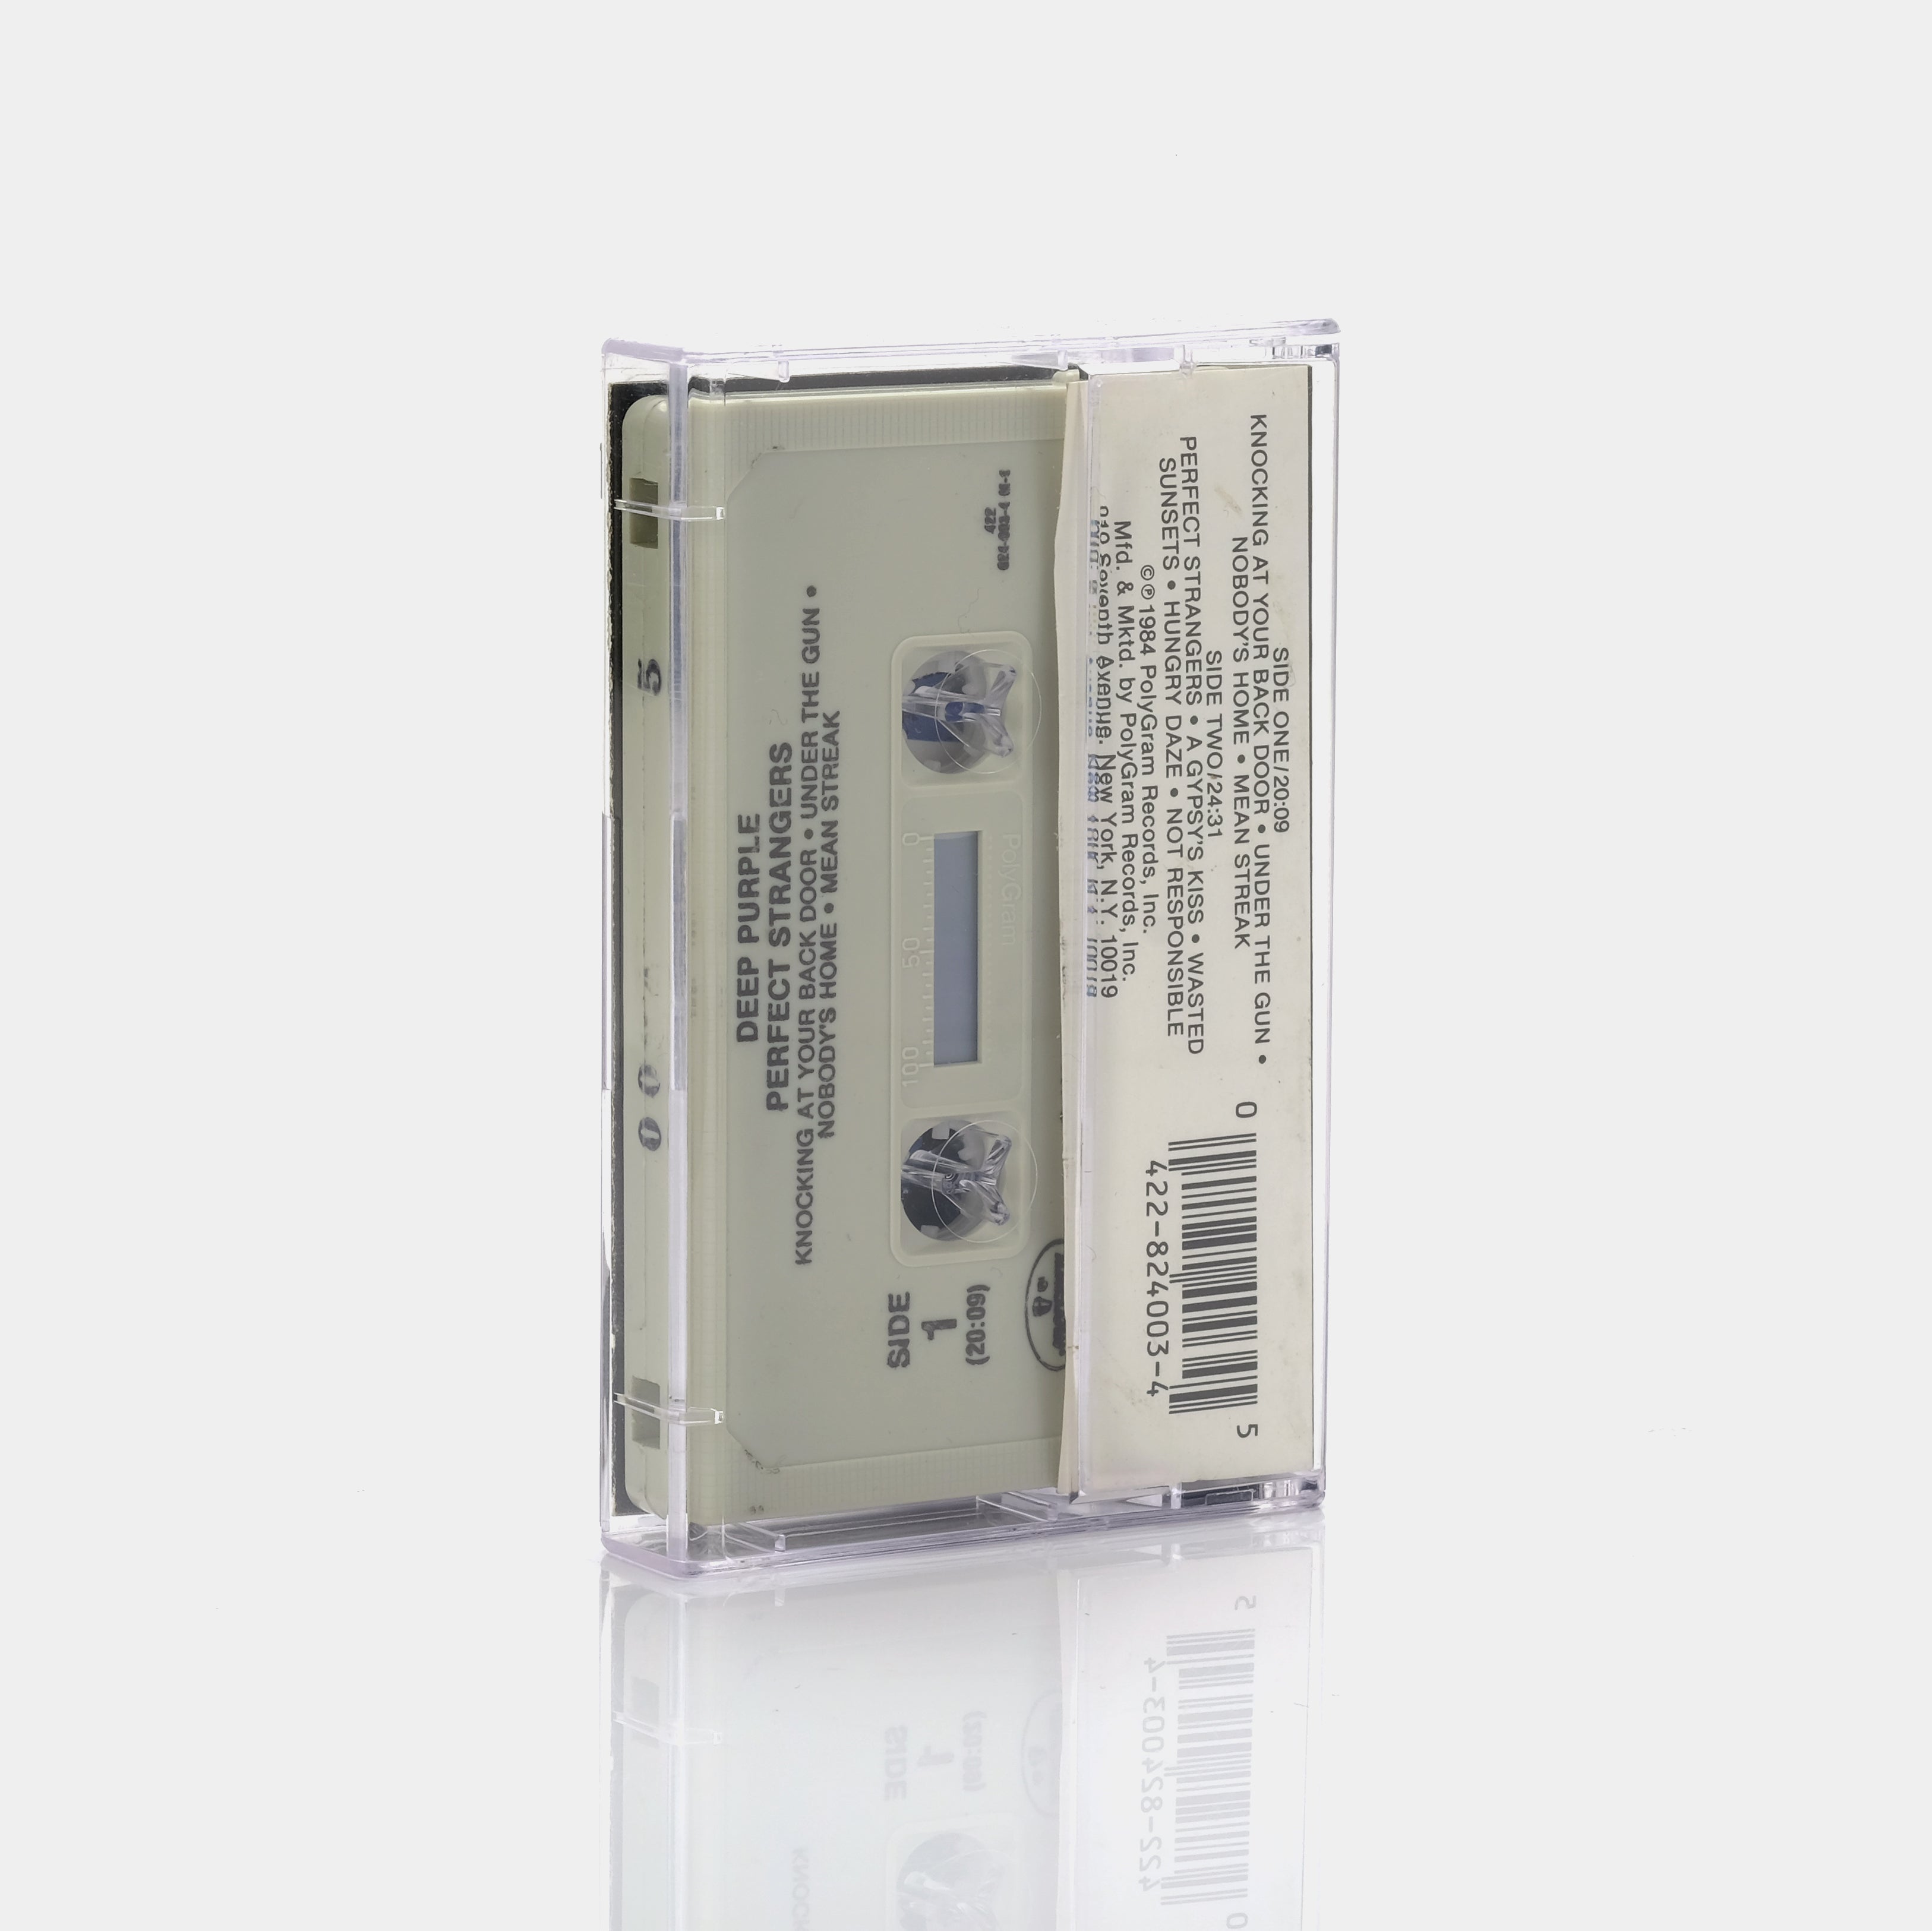 Deep Purple - Perfect Strangers Cassette Tape